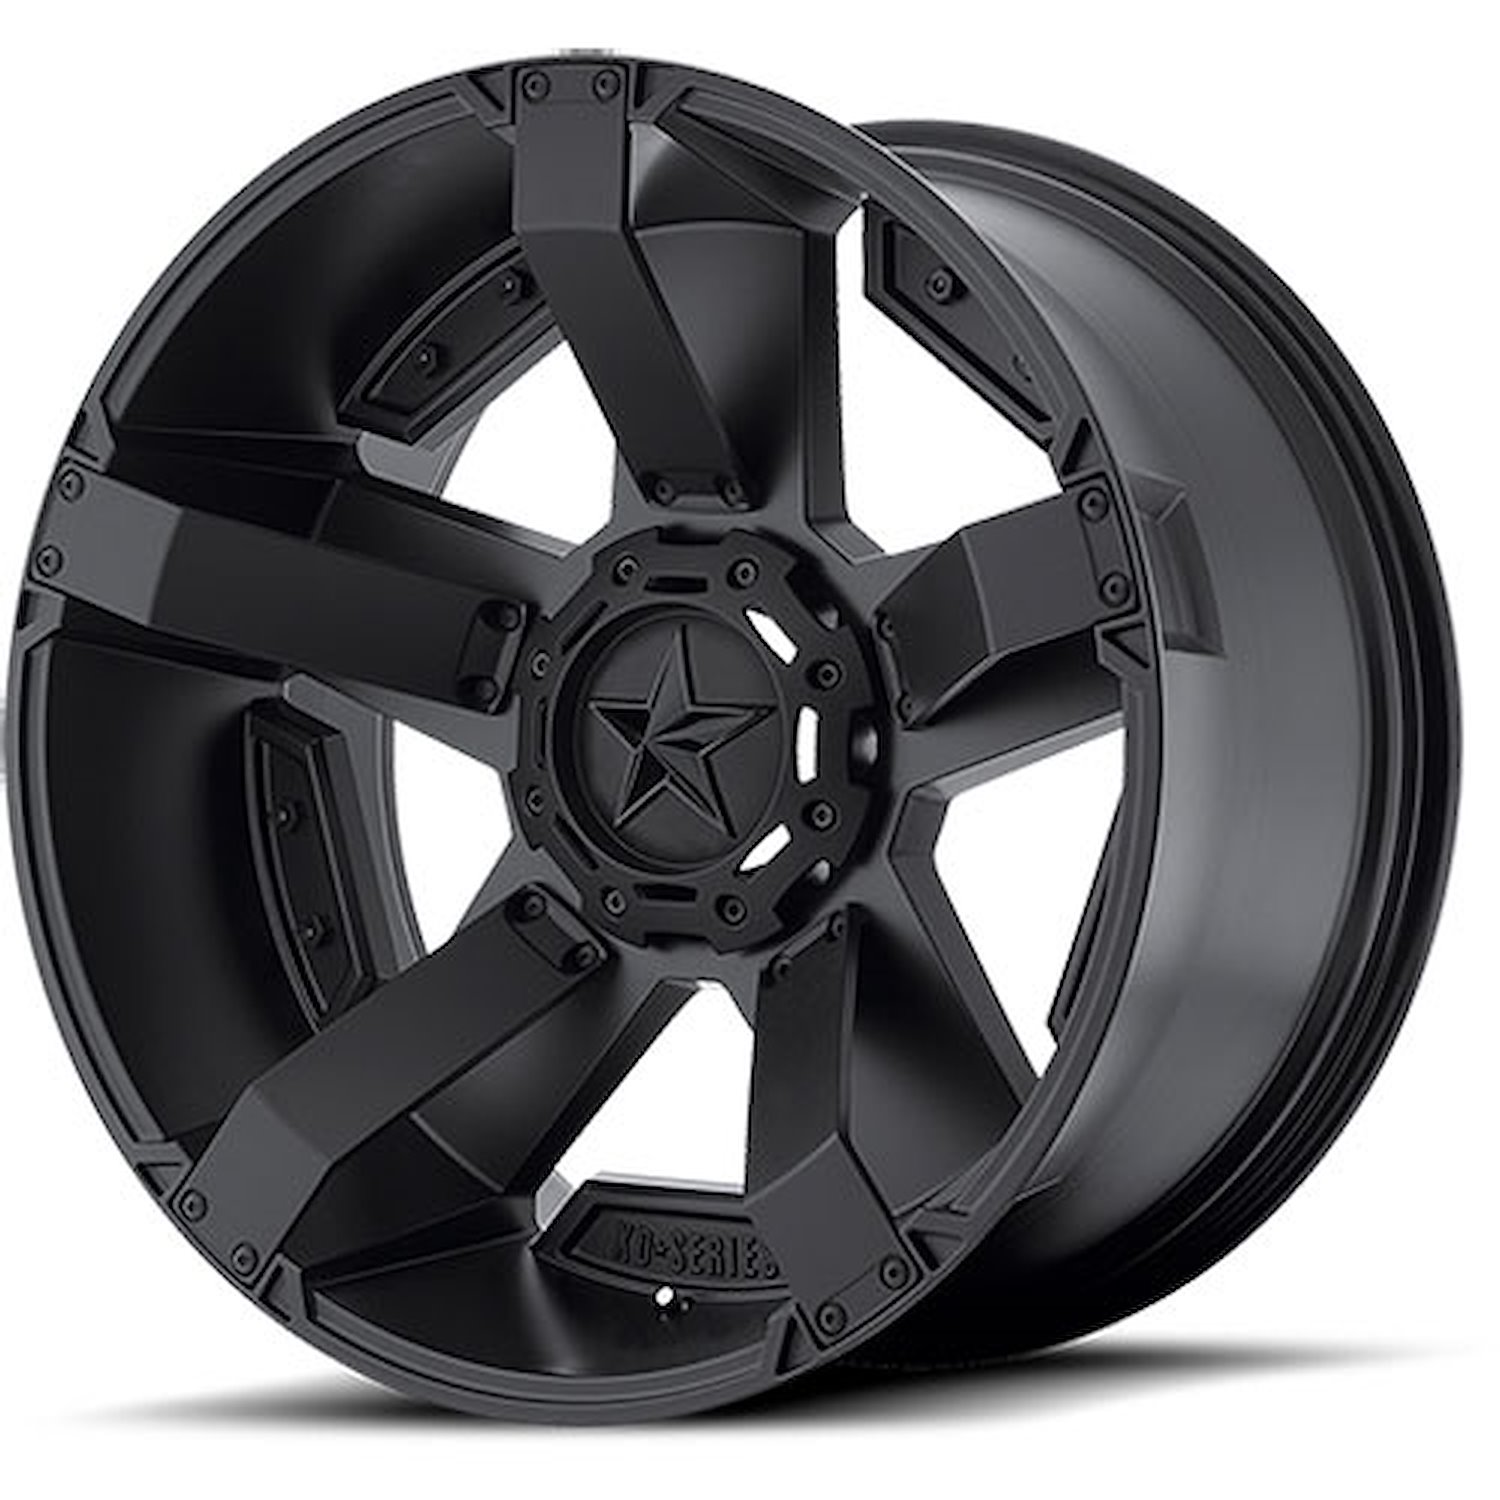 XD811 Series RS2 Rockstar Wheel Size: 18" x 9"